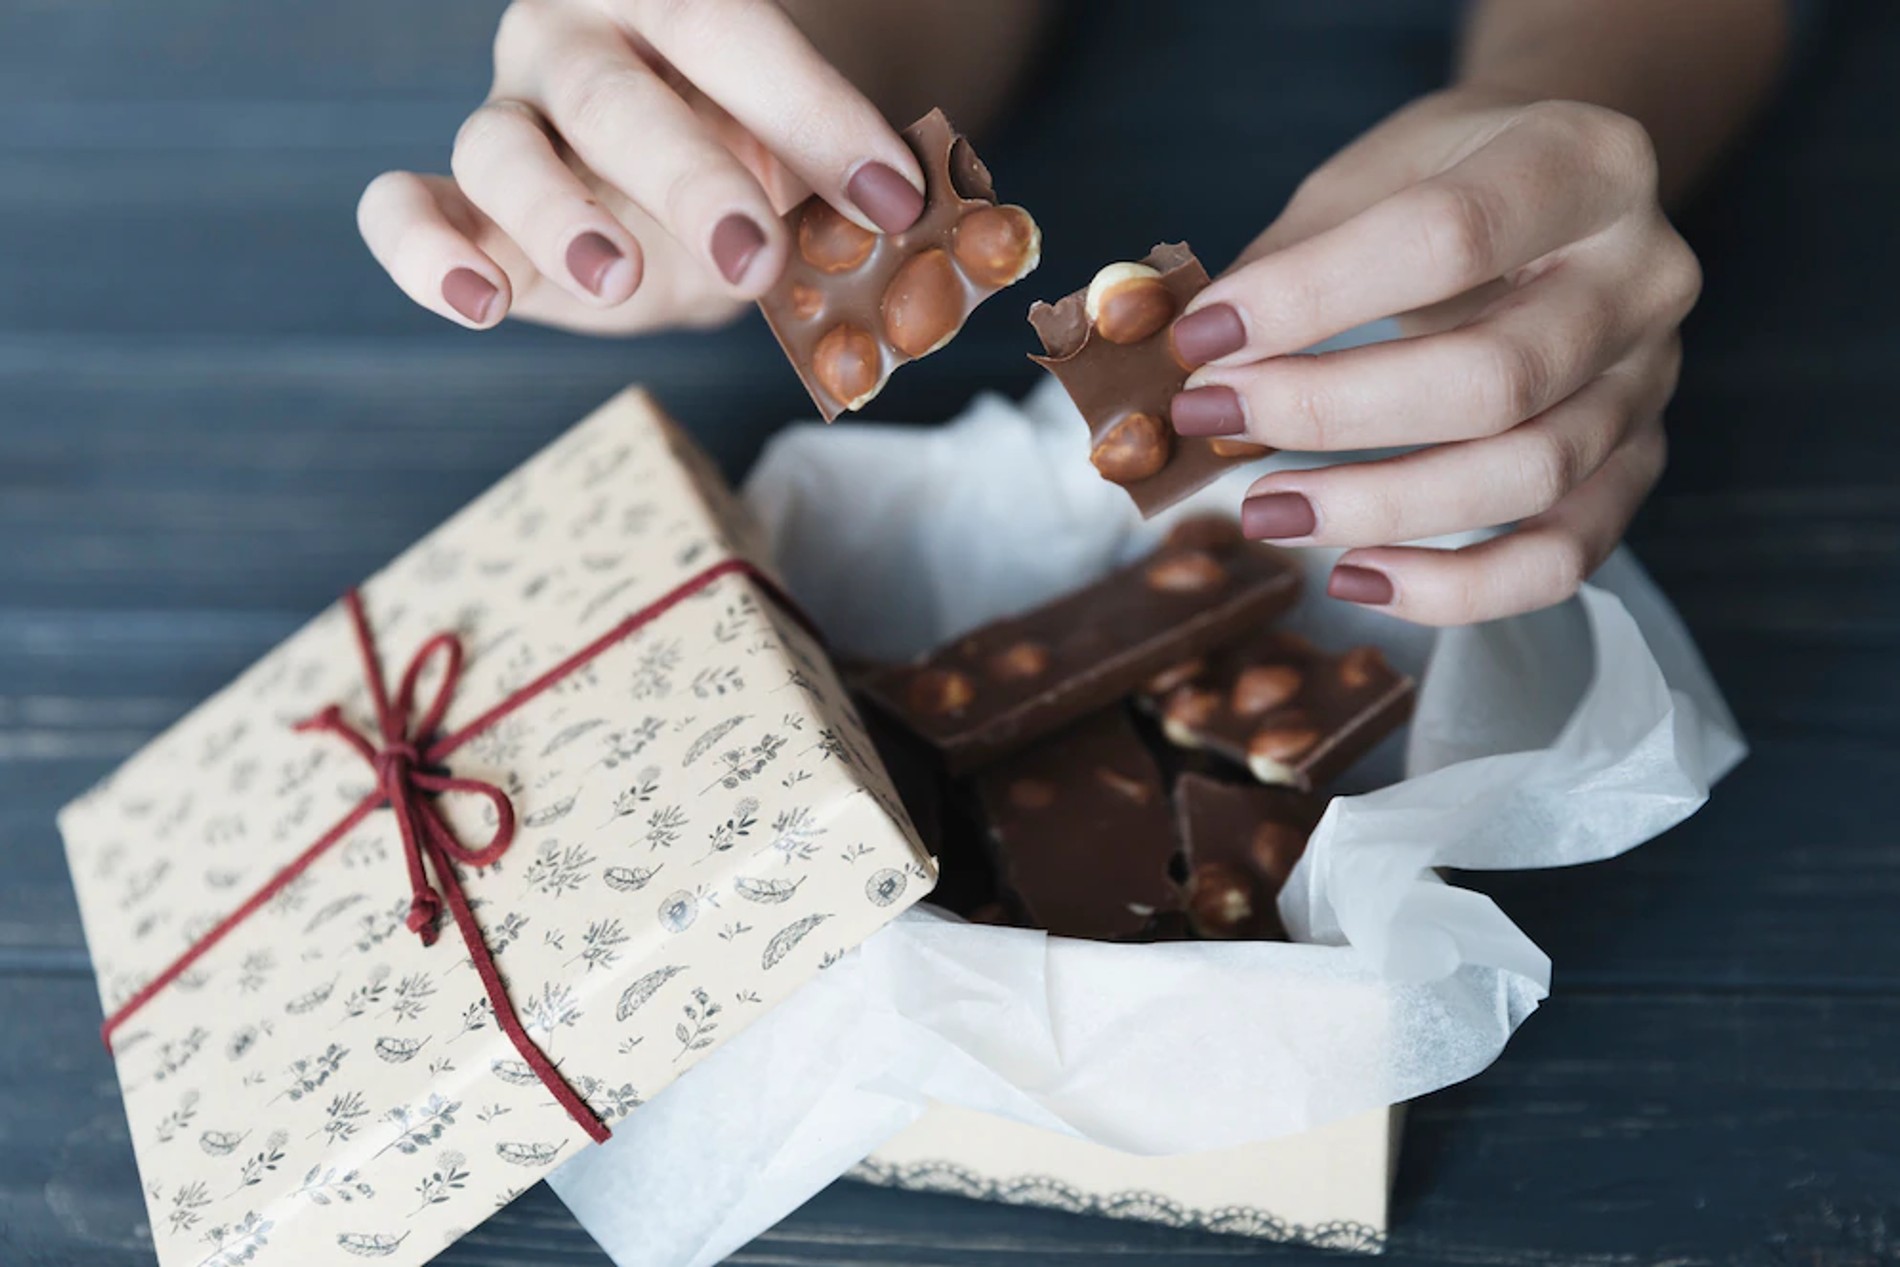 Ломай шоколад. Шоколадка в руке. Шоколадка в руке девушки. Разломанный шоколад.